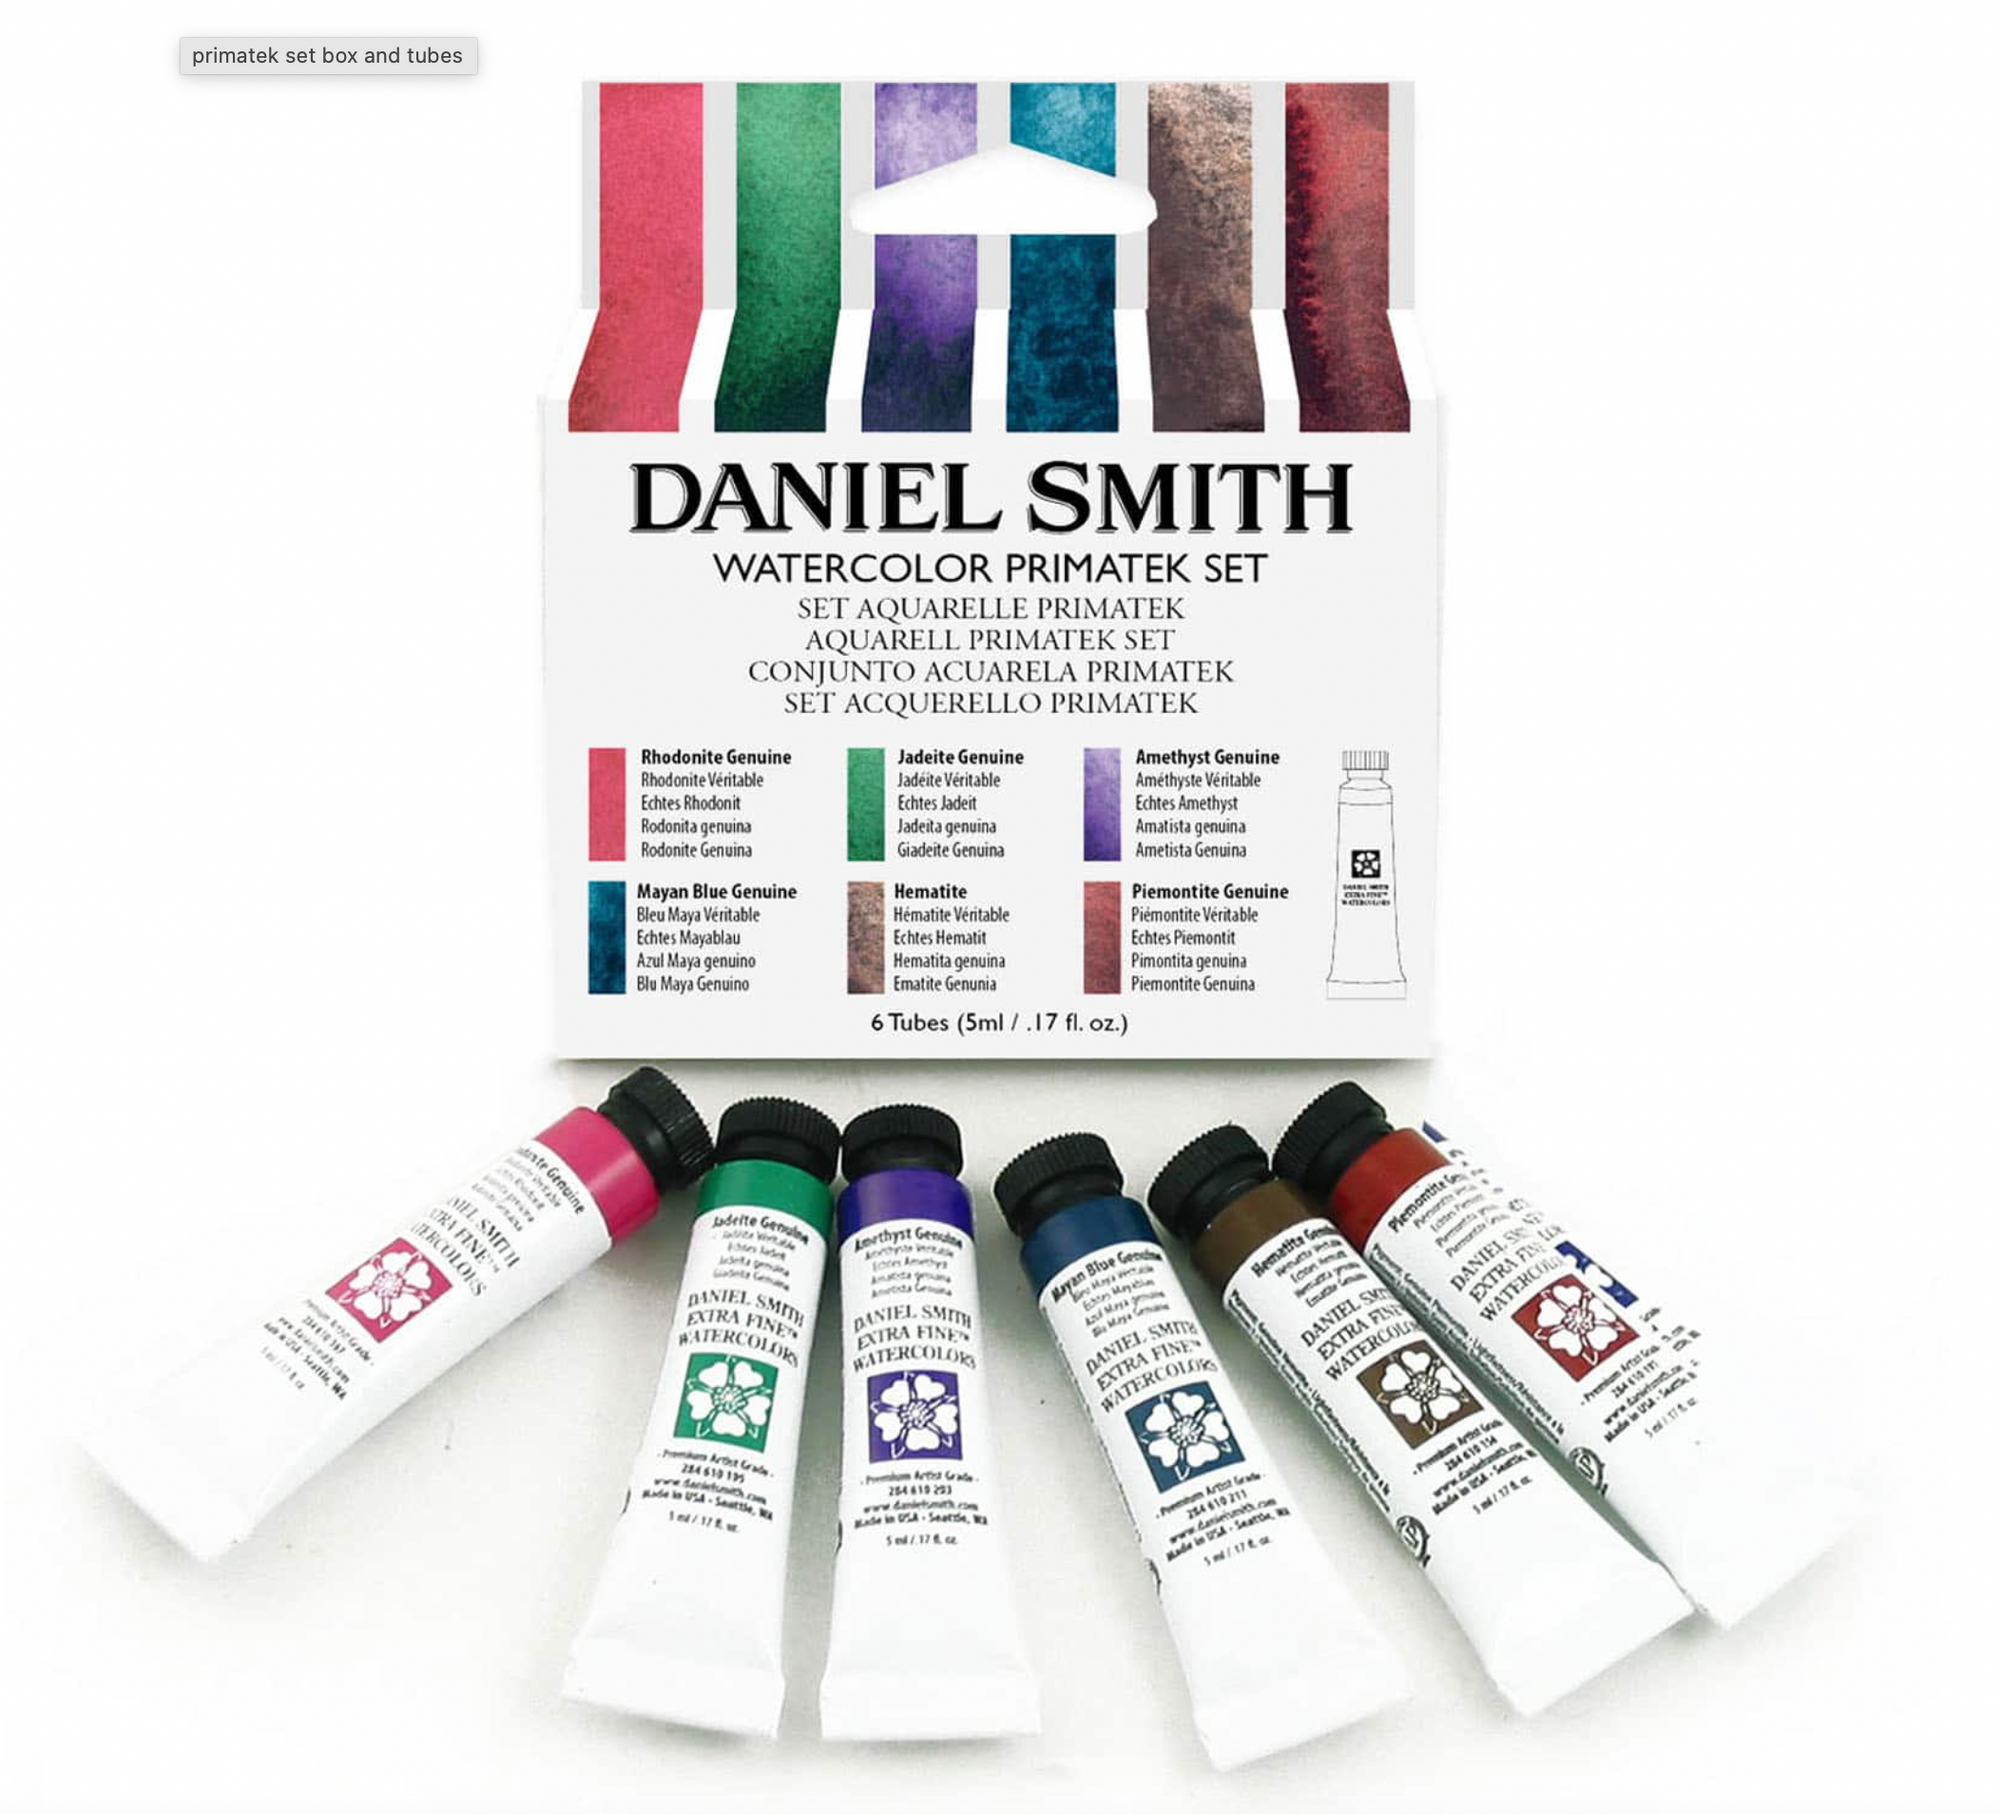 Daniel Smith - Watercolor Primatek Set